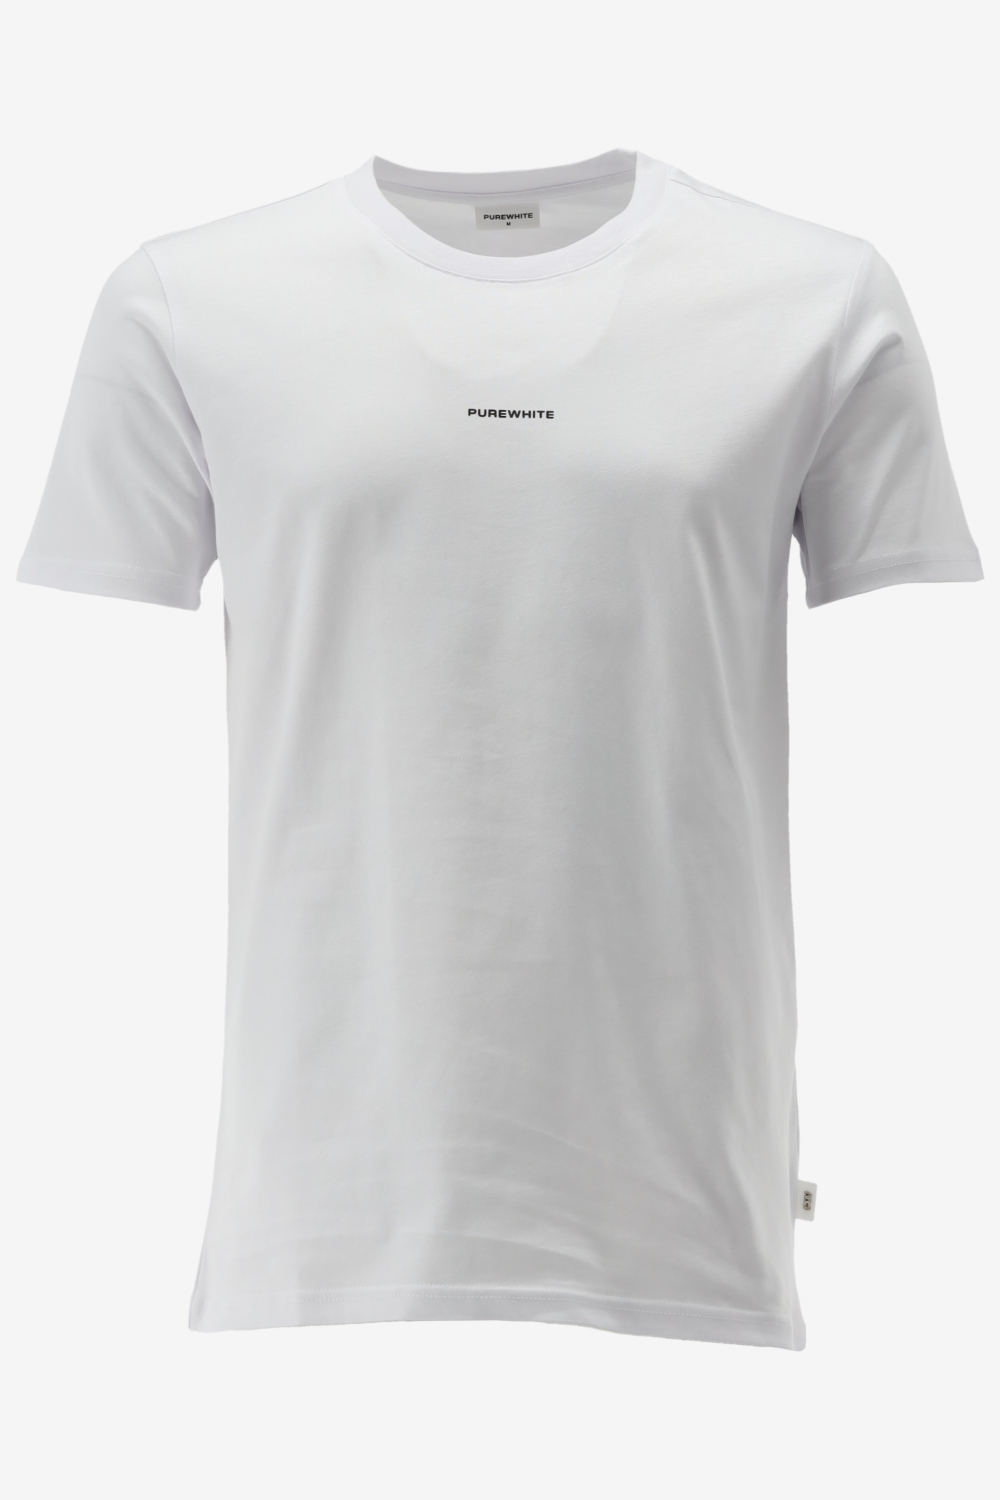 Purewhite T-shirt 